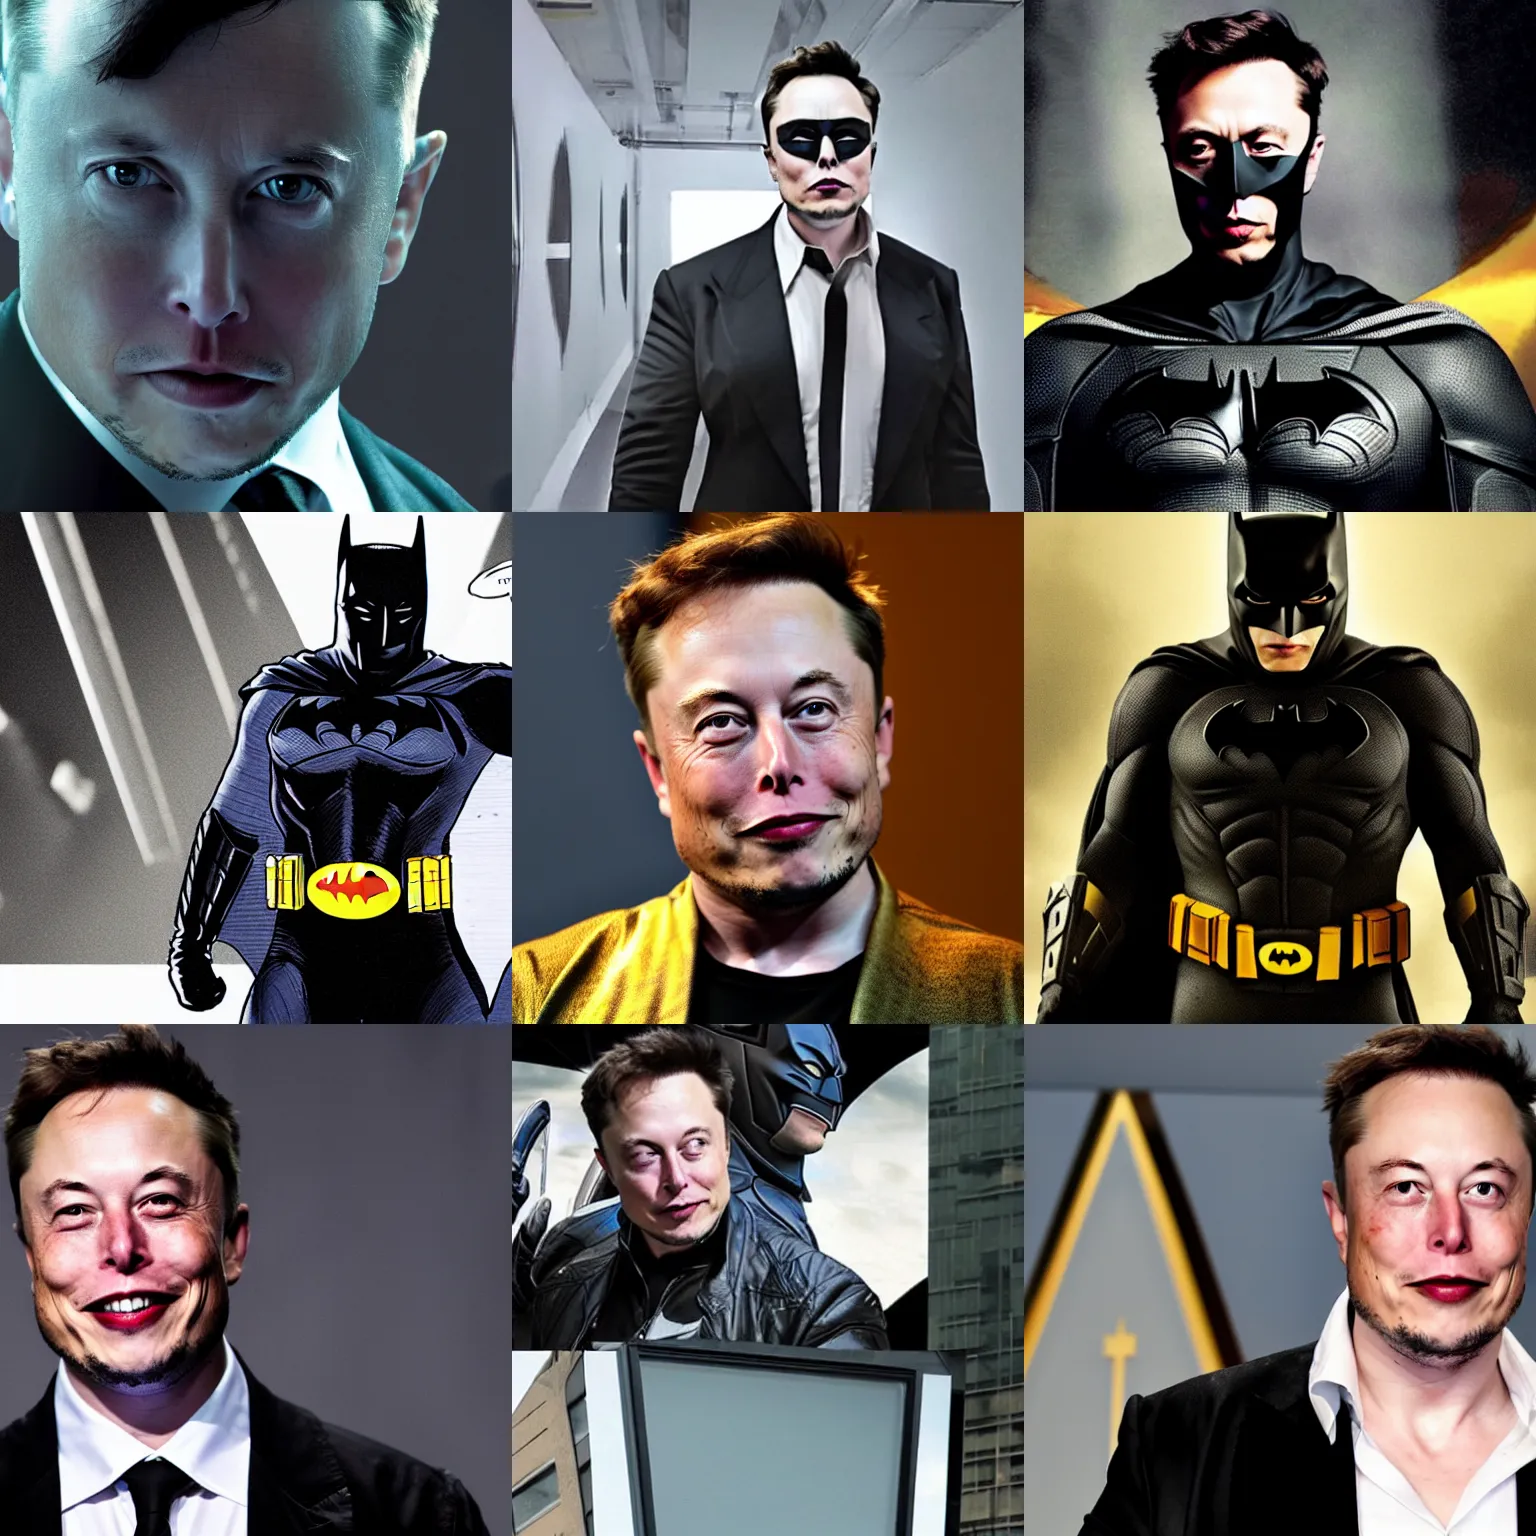 Prompt: a photo of Elon Musk as Batman